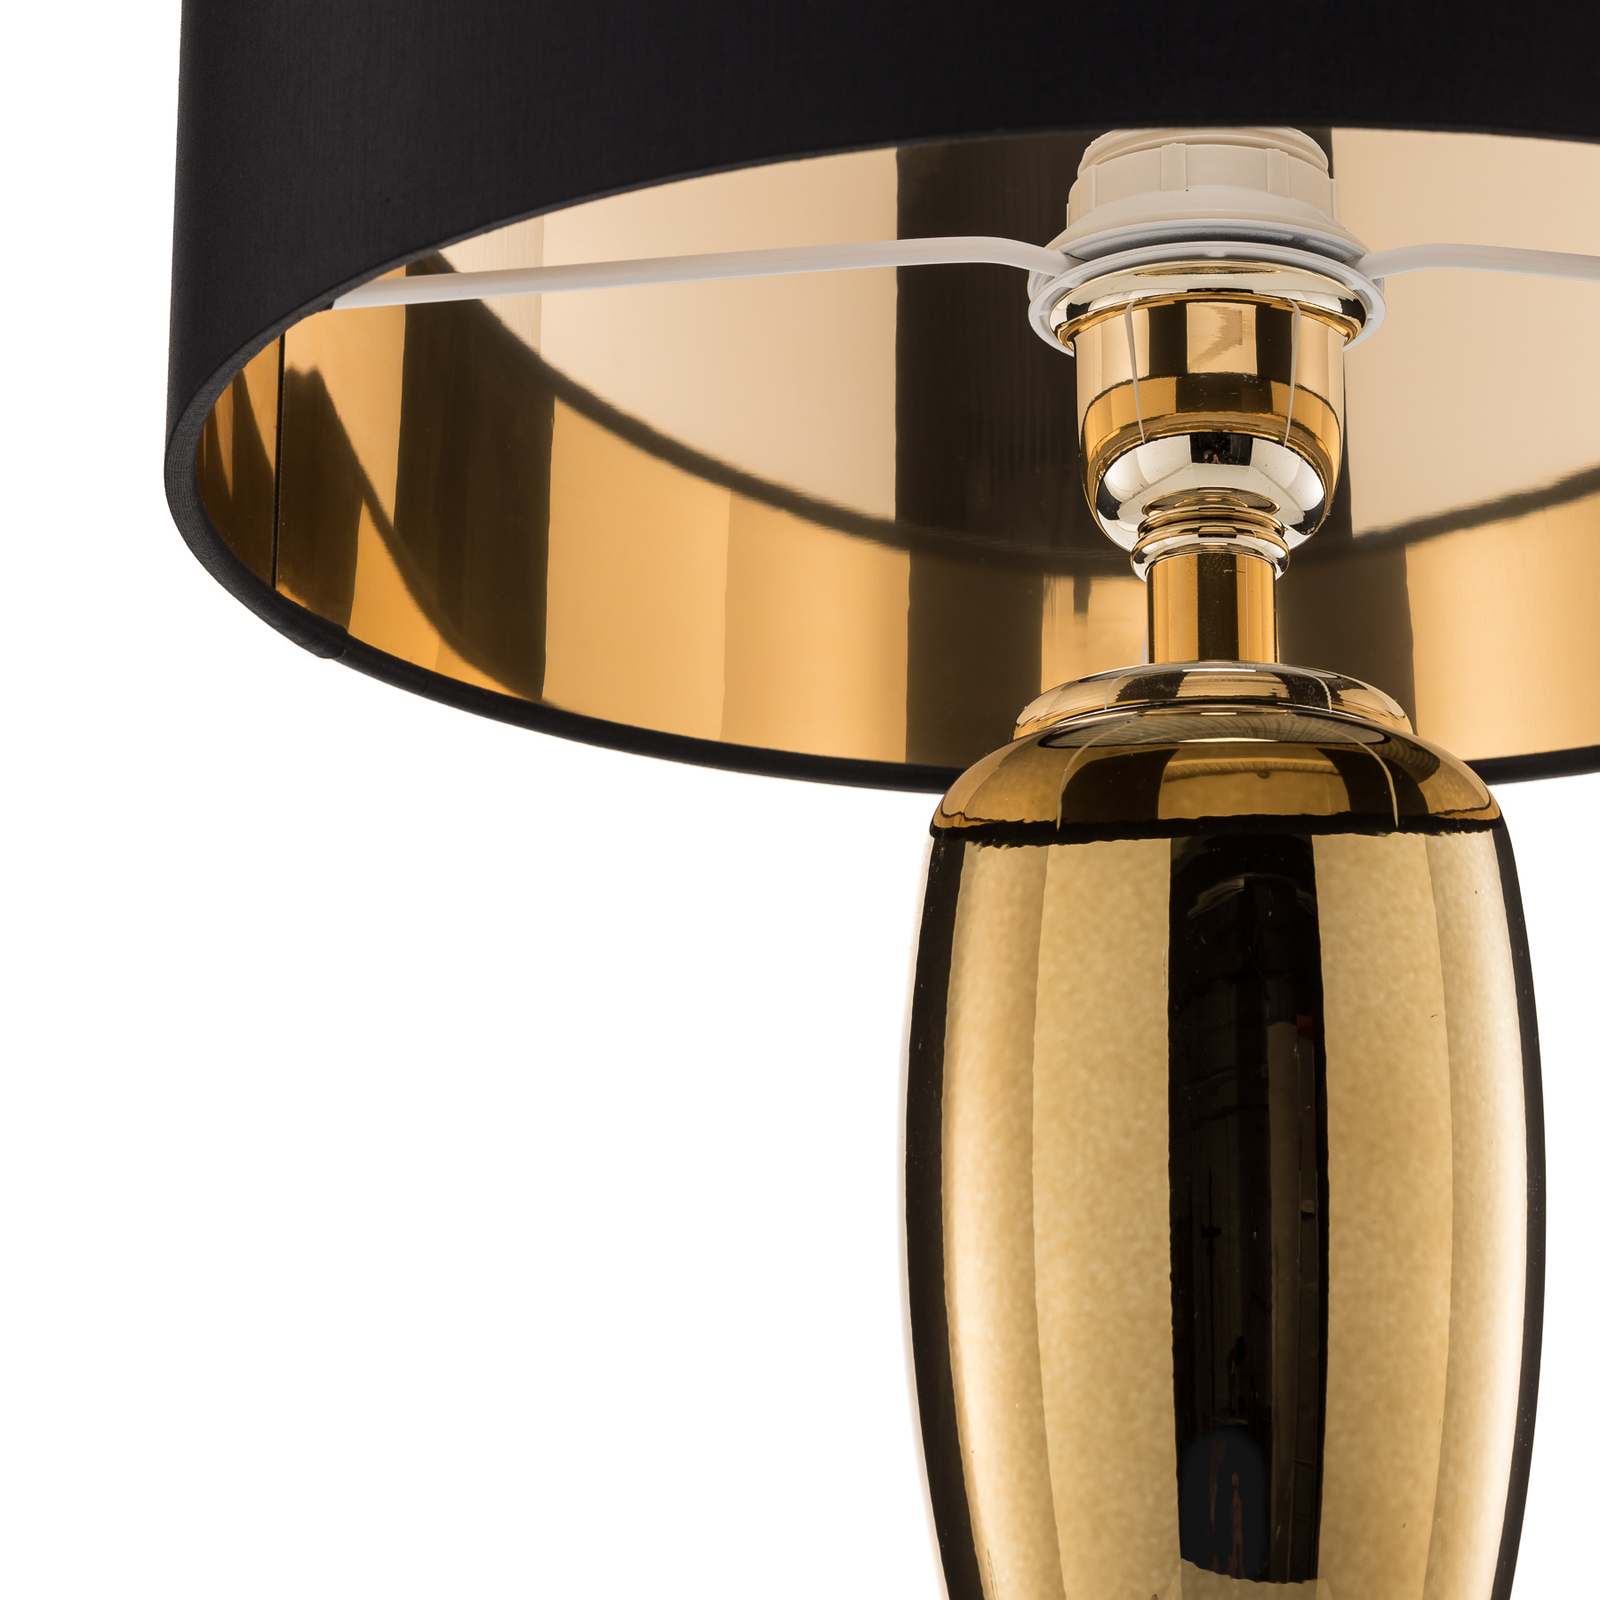 Show Ogiva - bordslampa i svart och guld textil